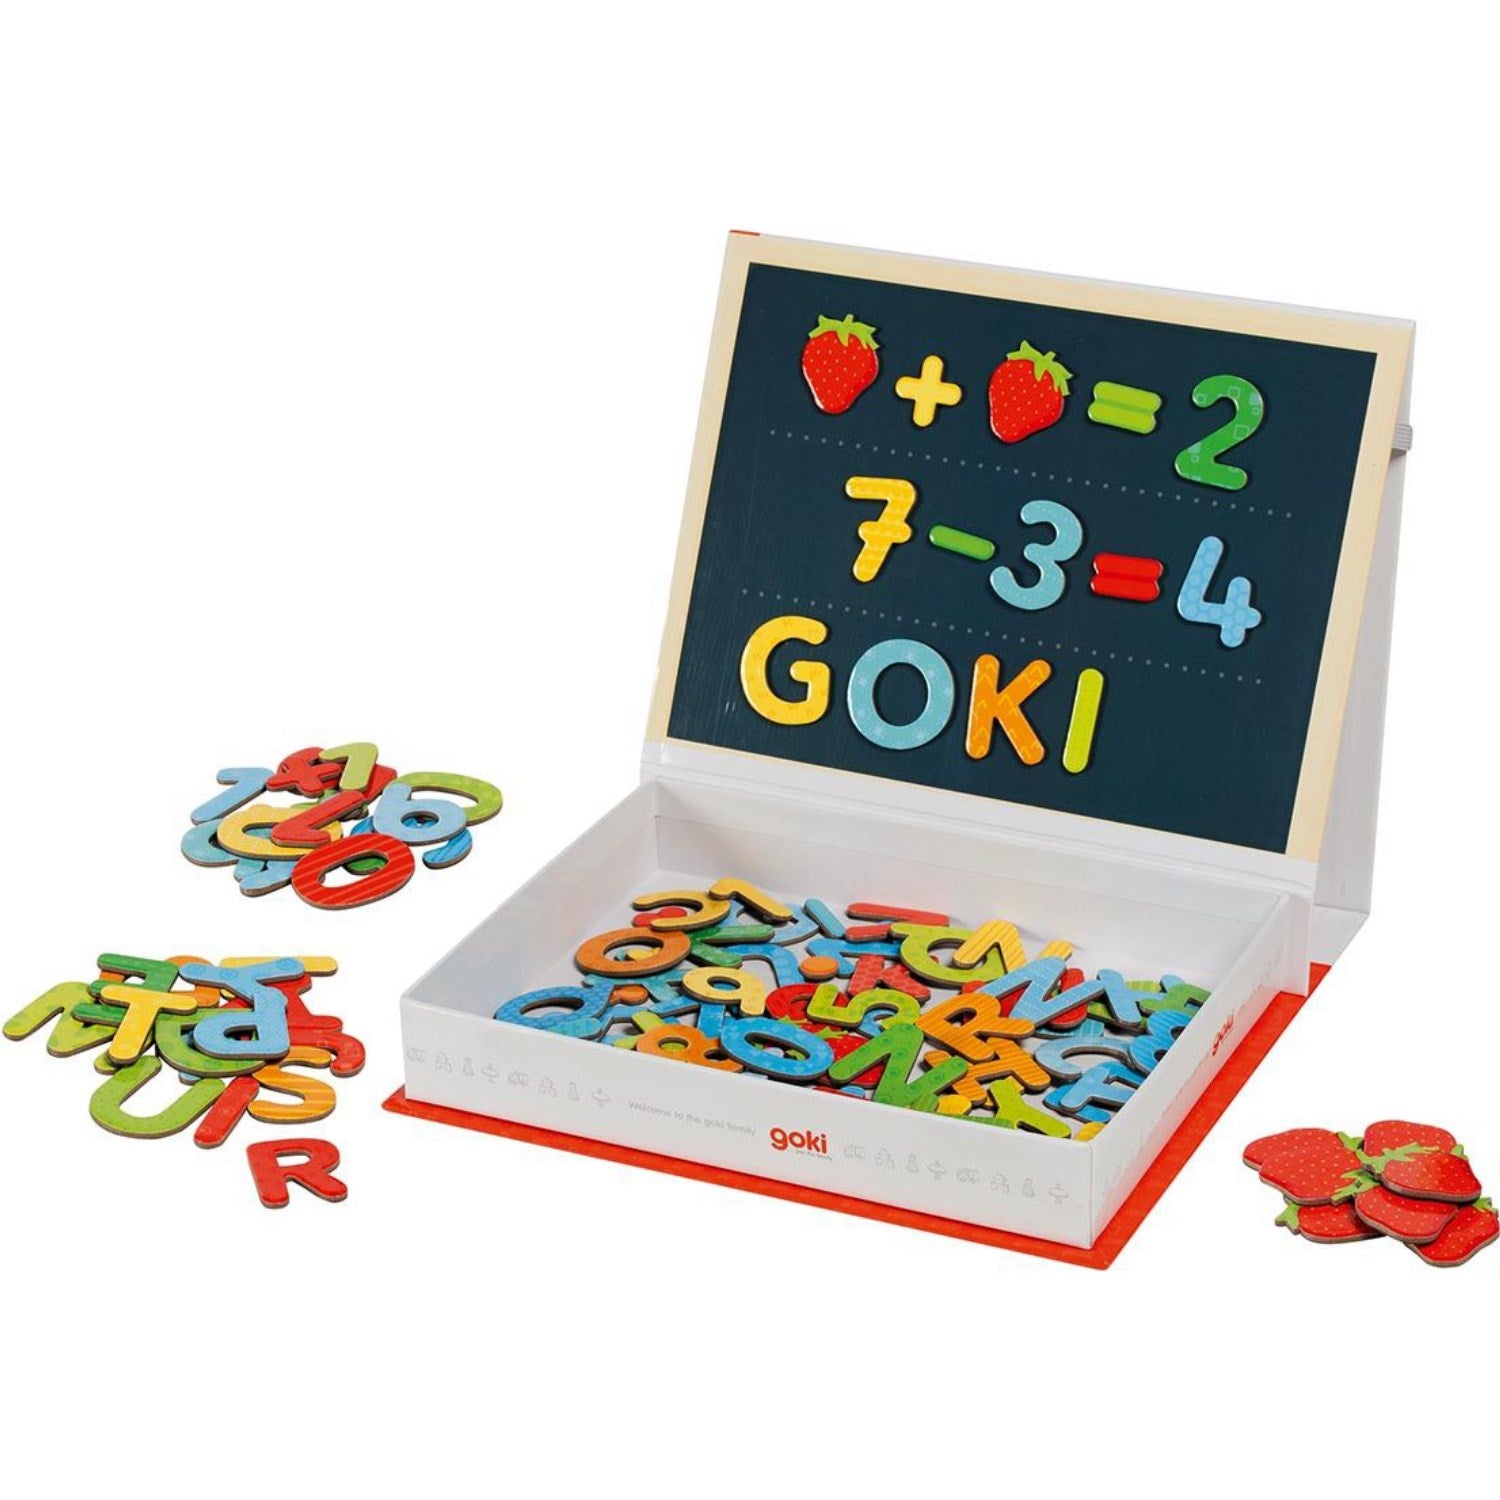 Goki multicolor Magnetic Game Preschool